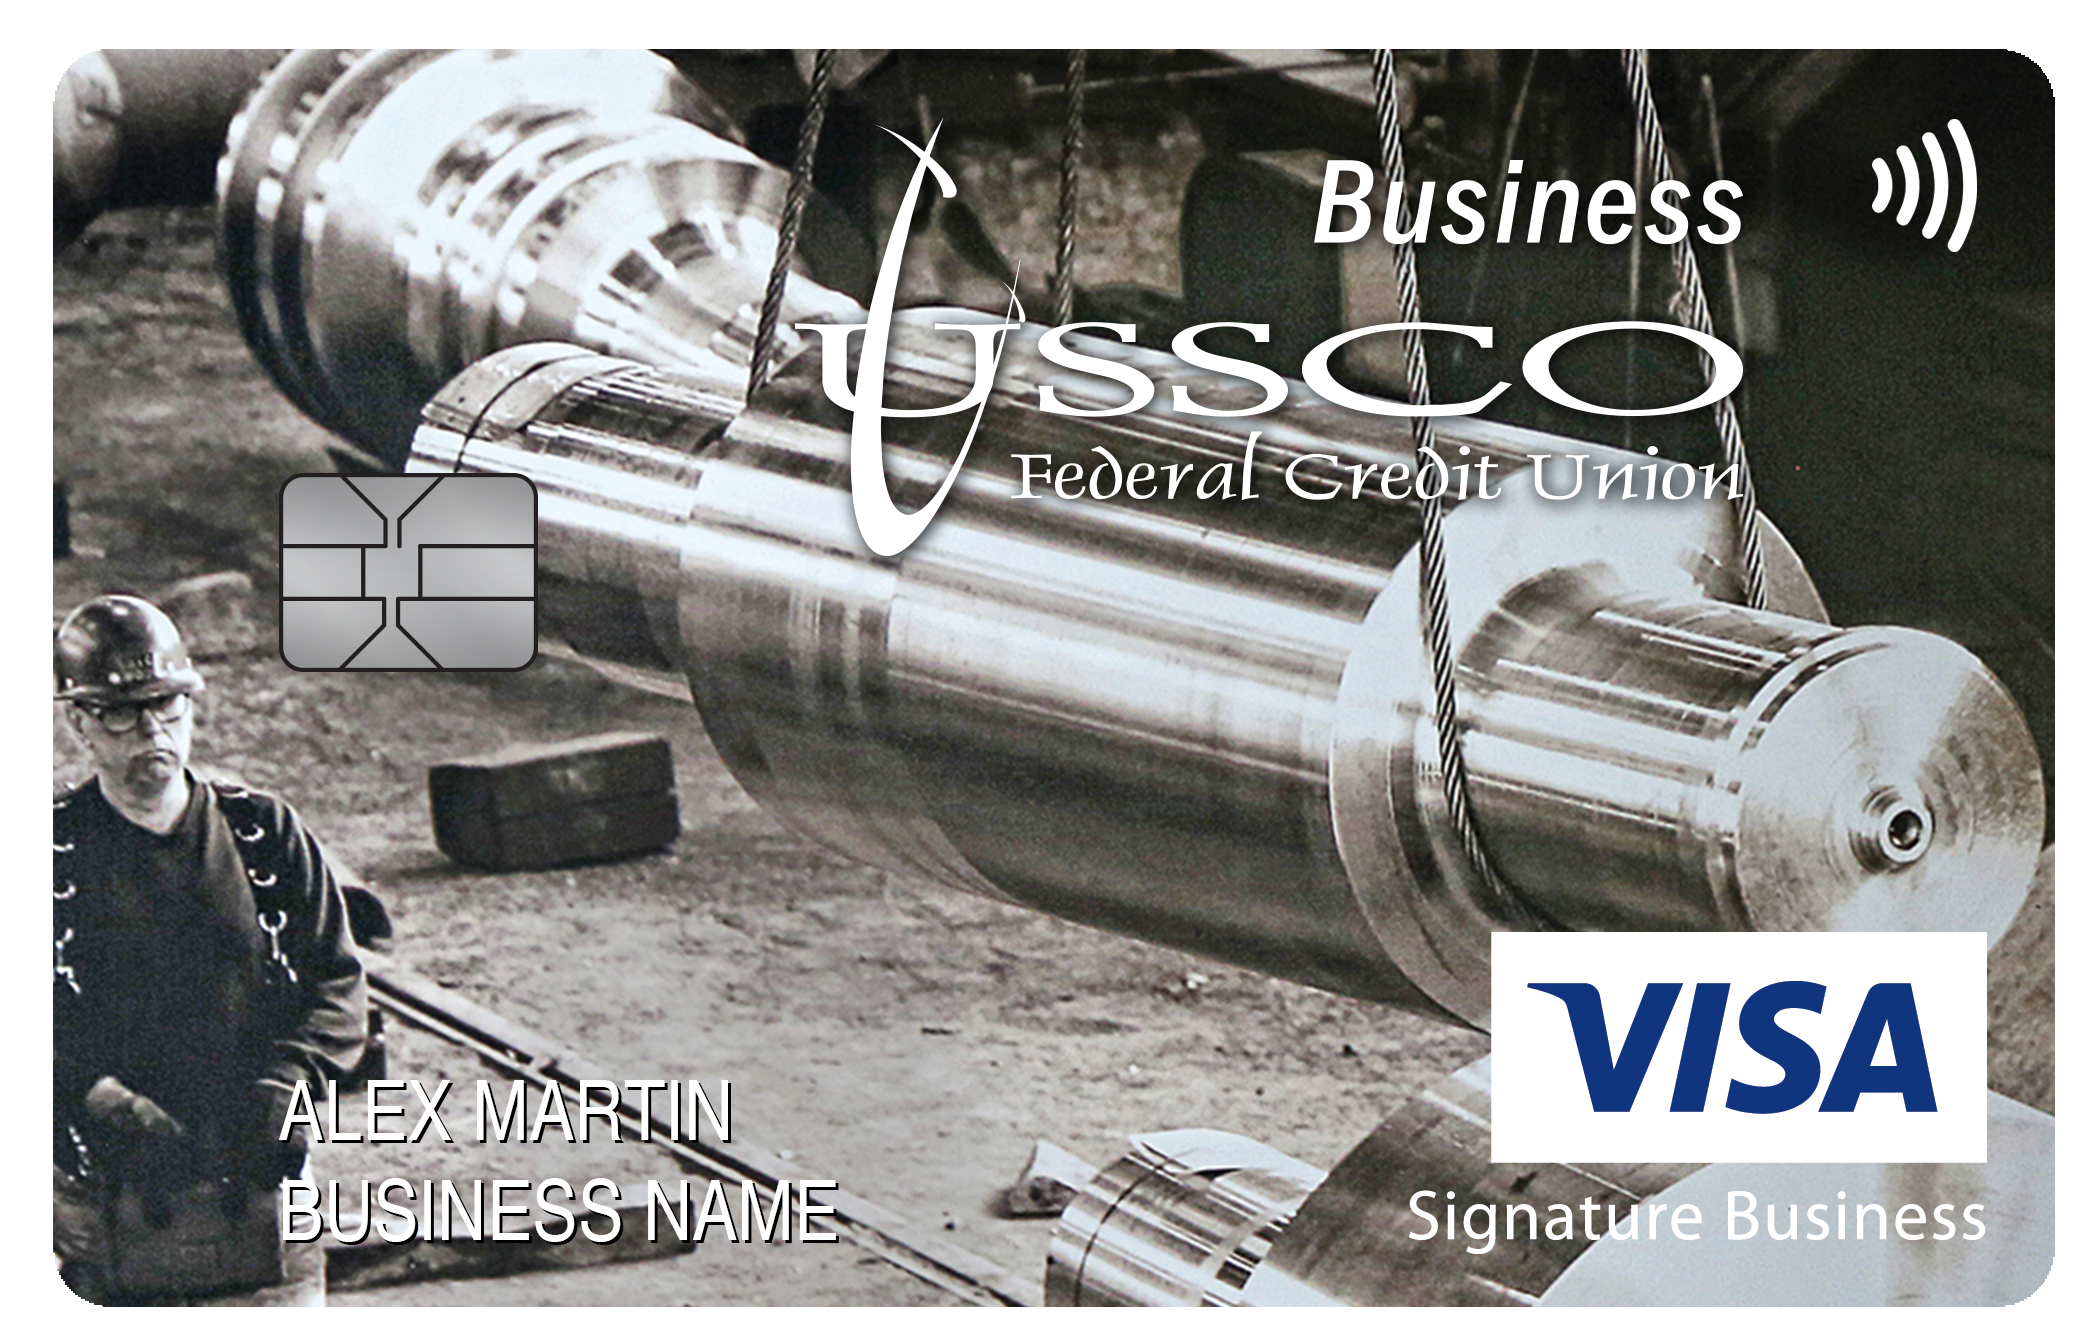 USSCO Federal Credit Union Smart Business Rewards Card